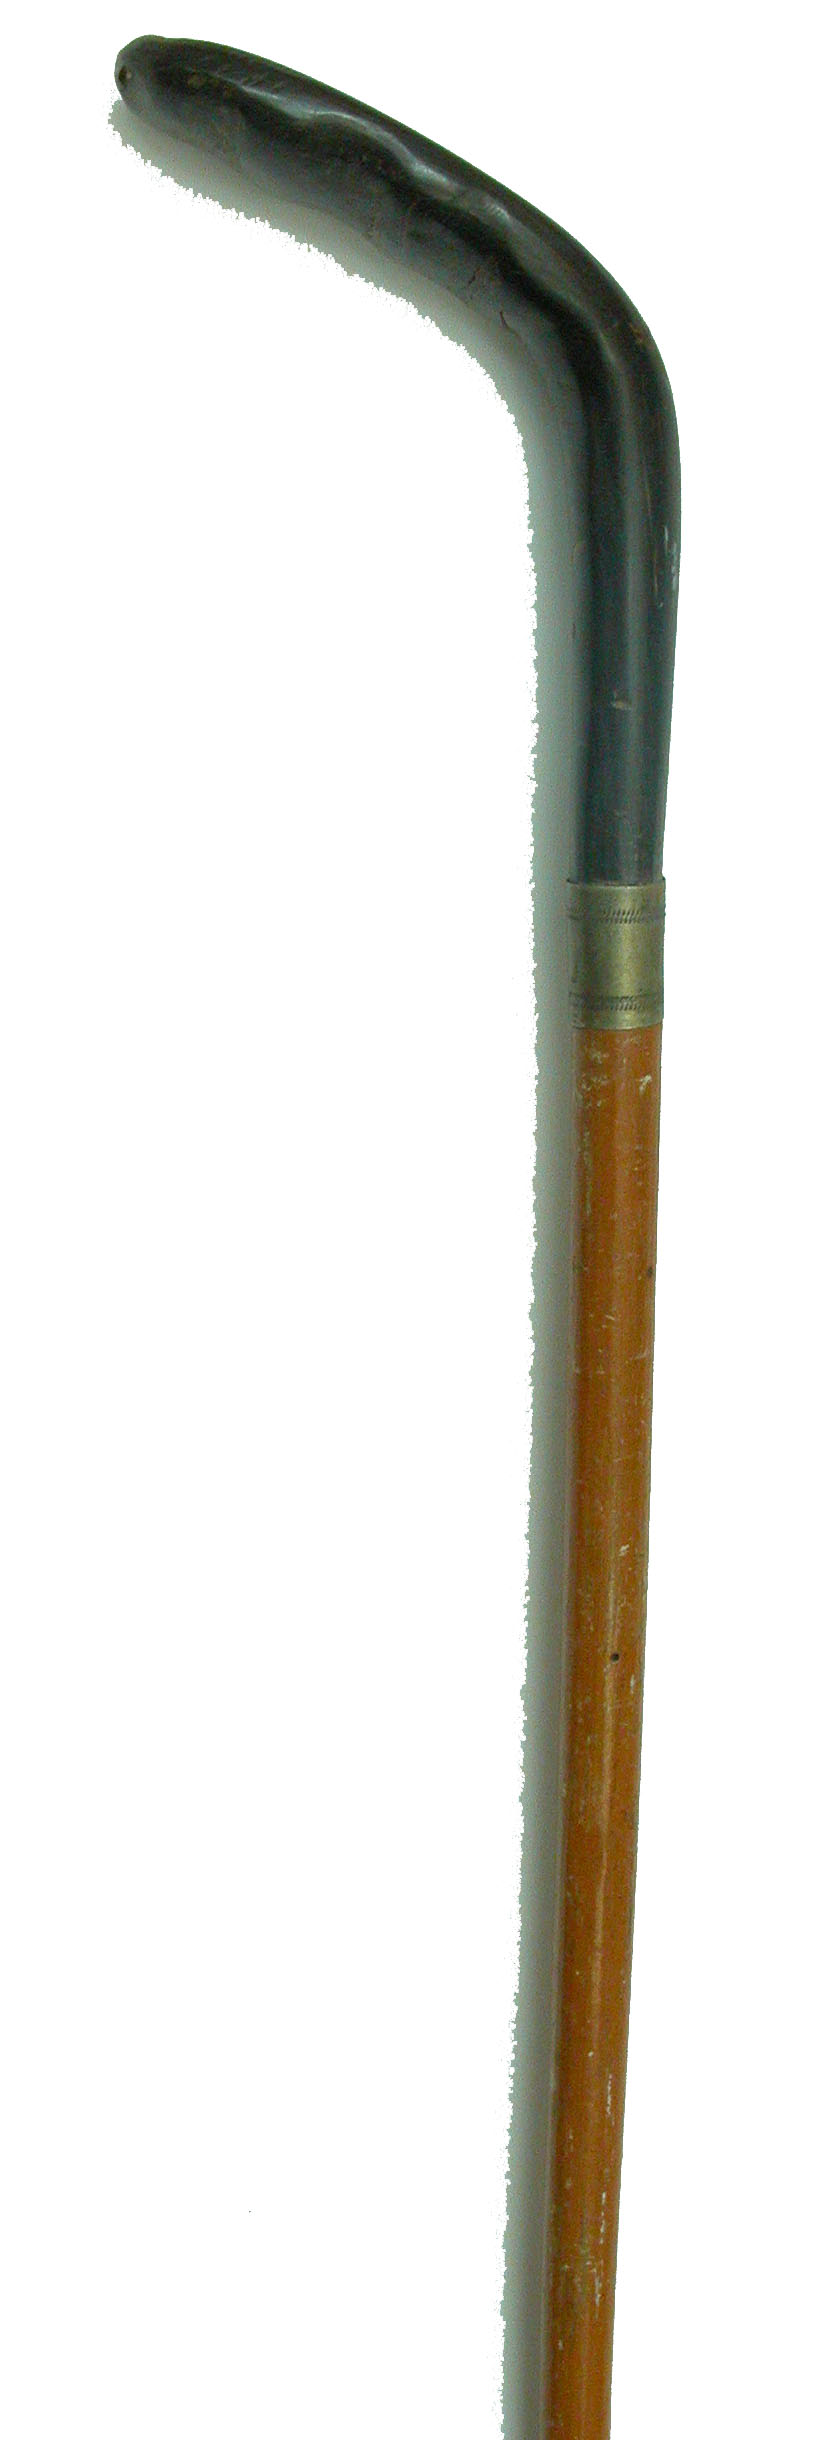 Black Horn Handled cane - click to enlarge.